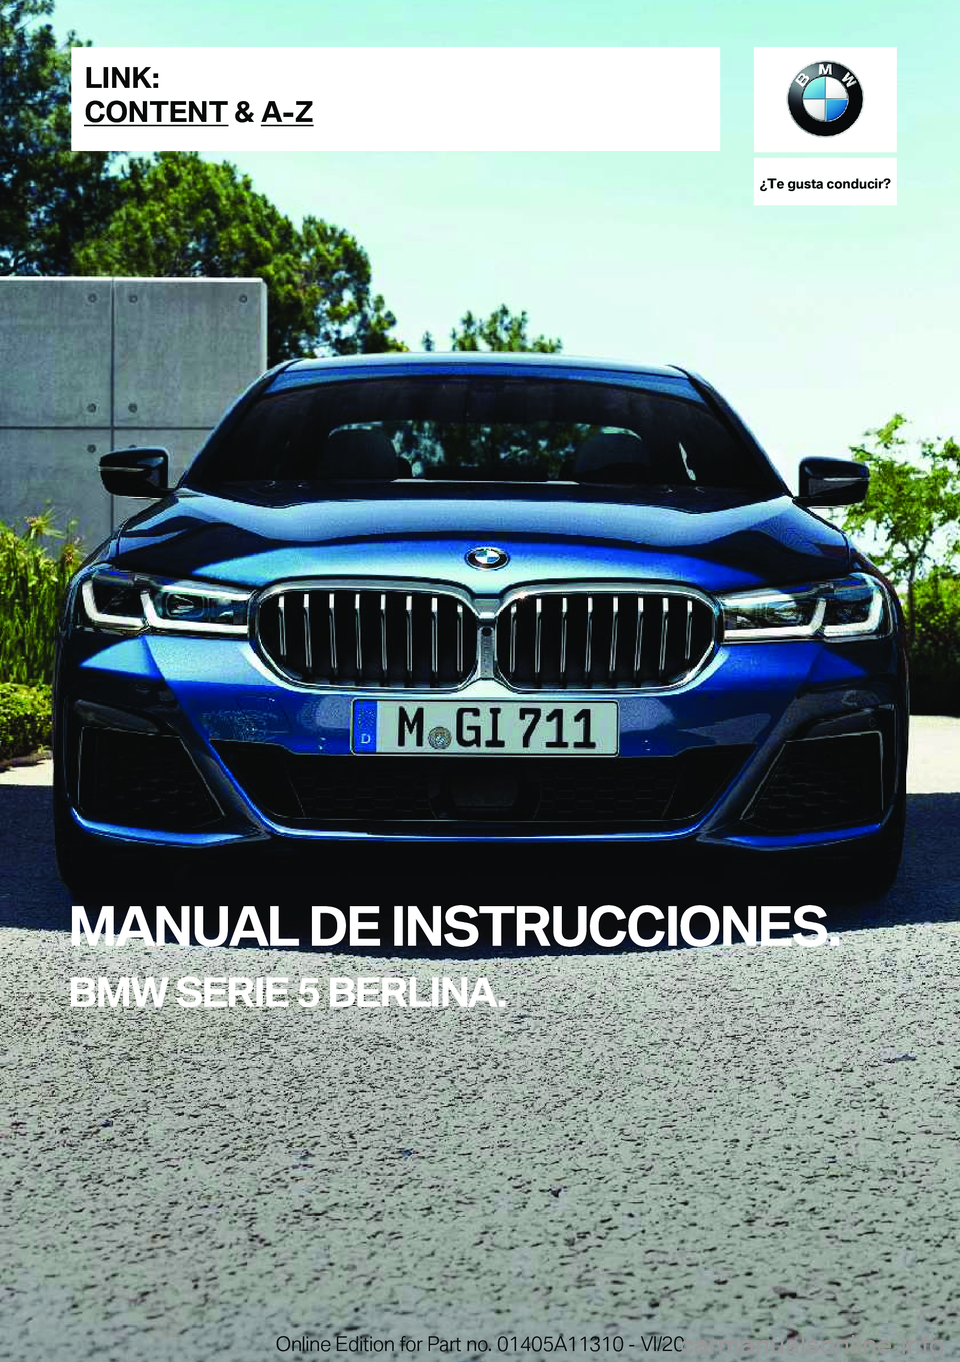 BMW 5 SERIES 2021  Manuales de Empleo (in Spanish) ��T�e��g�u�s�t�a��c�o�n�d�u�c�i�r� 
�M�A�N�U�A�L��D�E��I�N�S�T�R�U�C�C�I�O�N�E�S�.
�B�M�W��S�E�R�I�E��5��B�E�R�L�I�N�A�.�L�I�N�K�:
�C�O�N�T�E�N�T��&��A�-�Z�O�n�l�i�n�e��E�d�i�t�i�o�n��f�o�